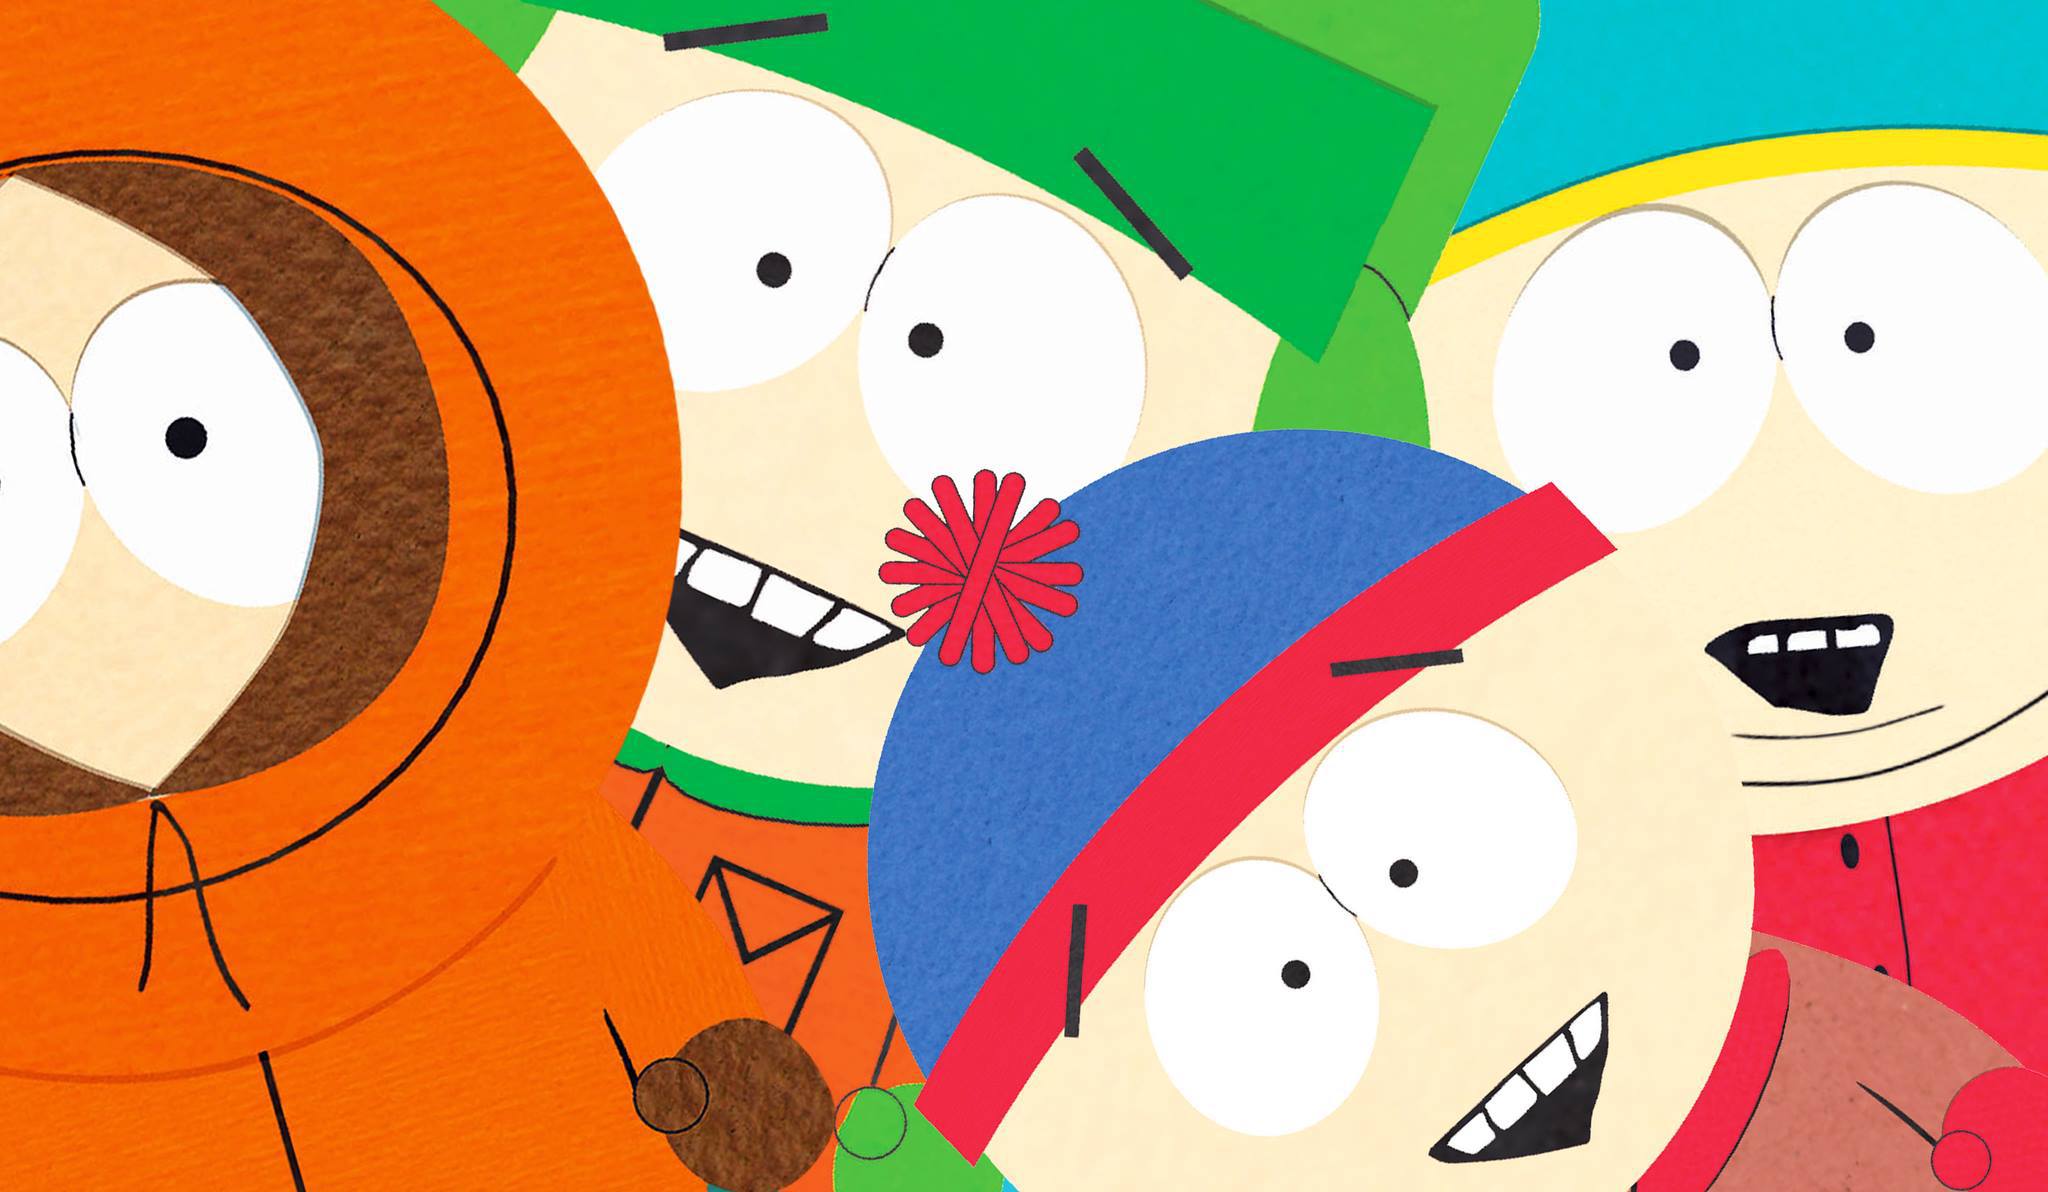 South Park season 20 - Wikipedia